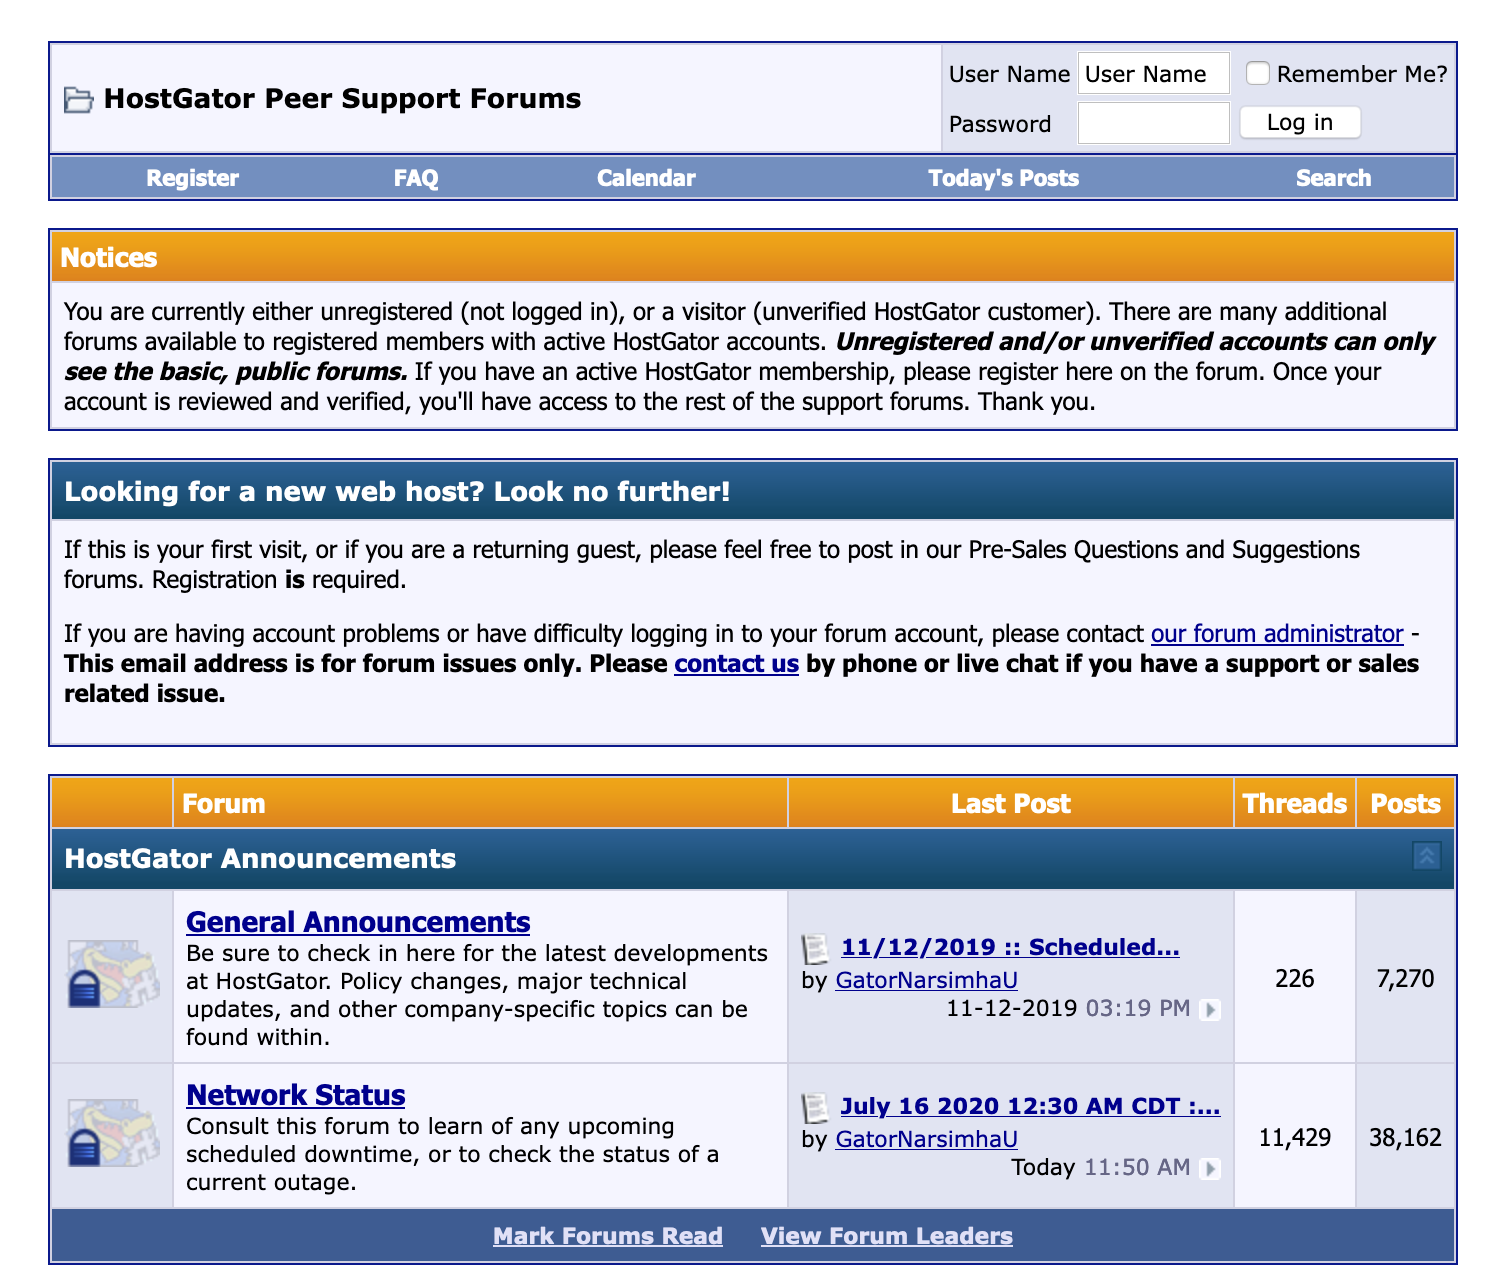 hostgator peer support forums example of an online forum